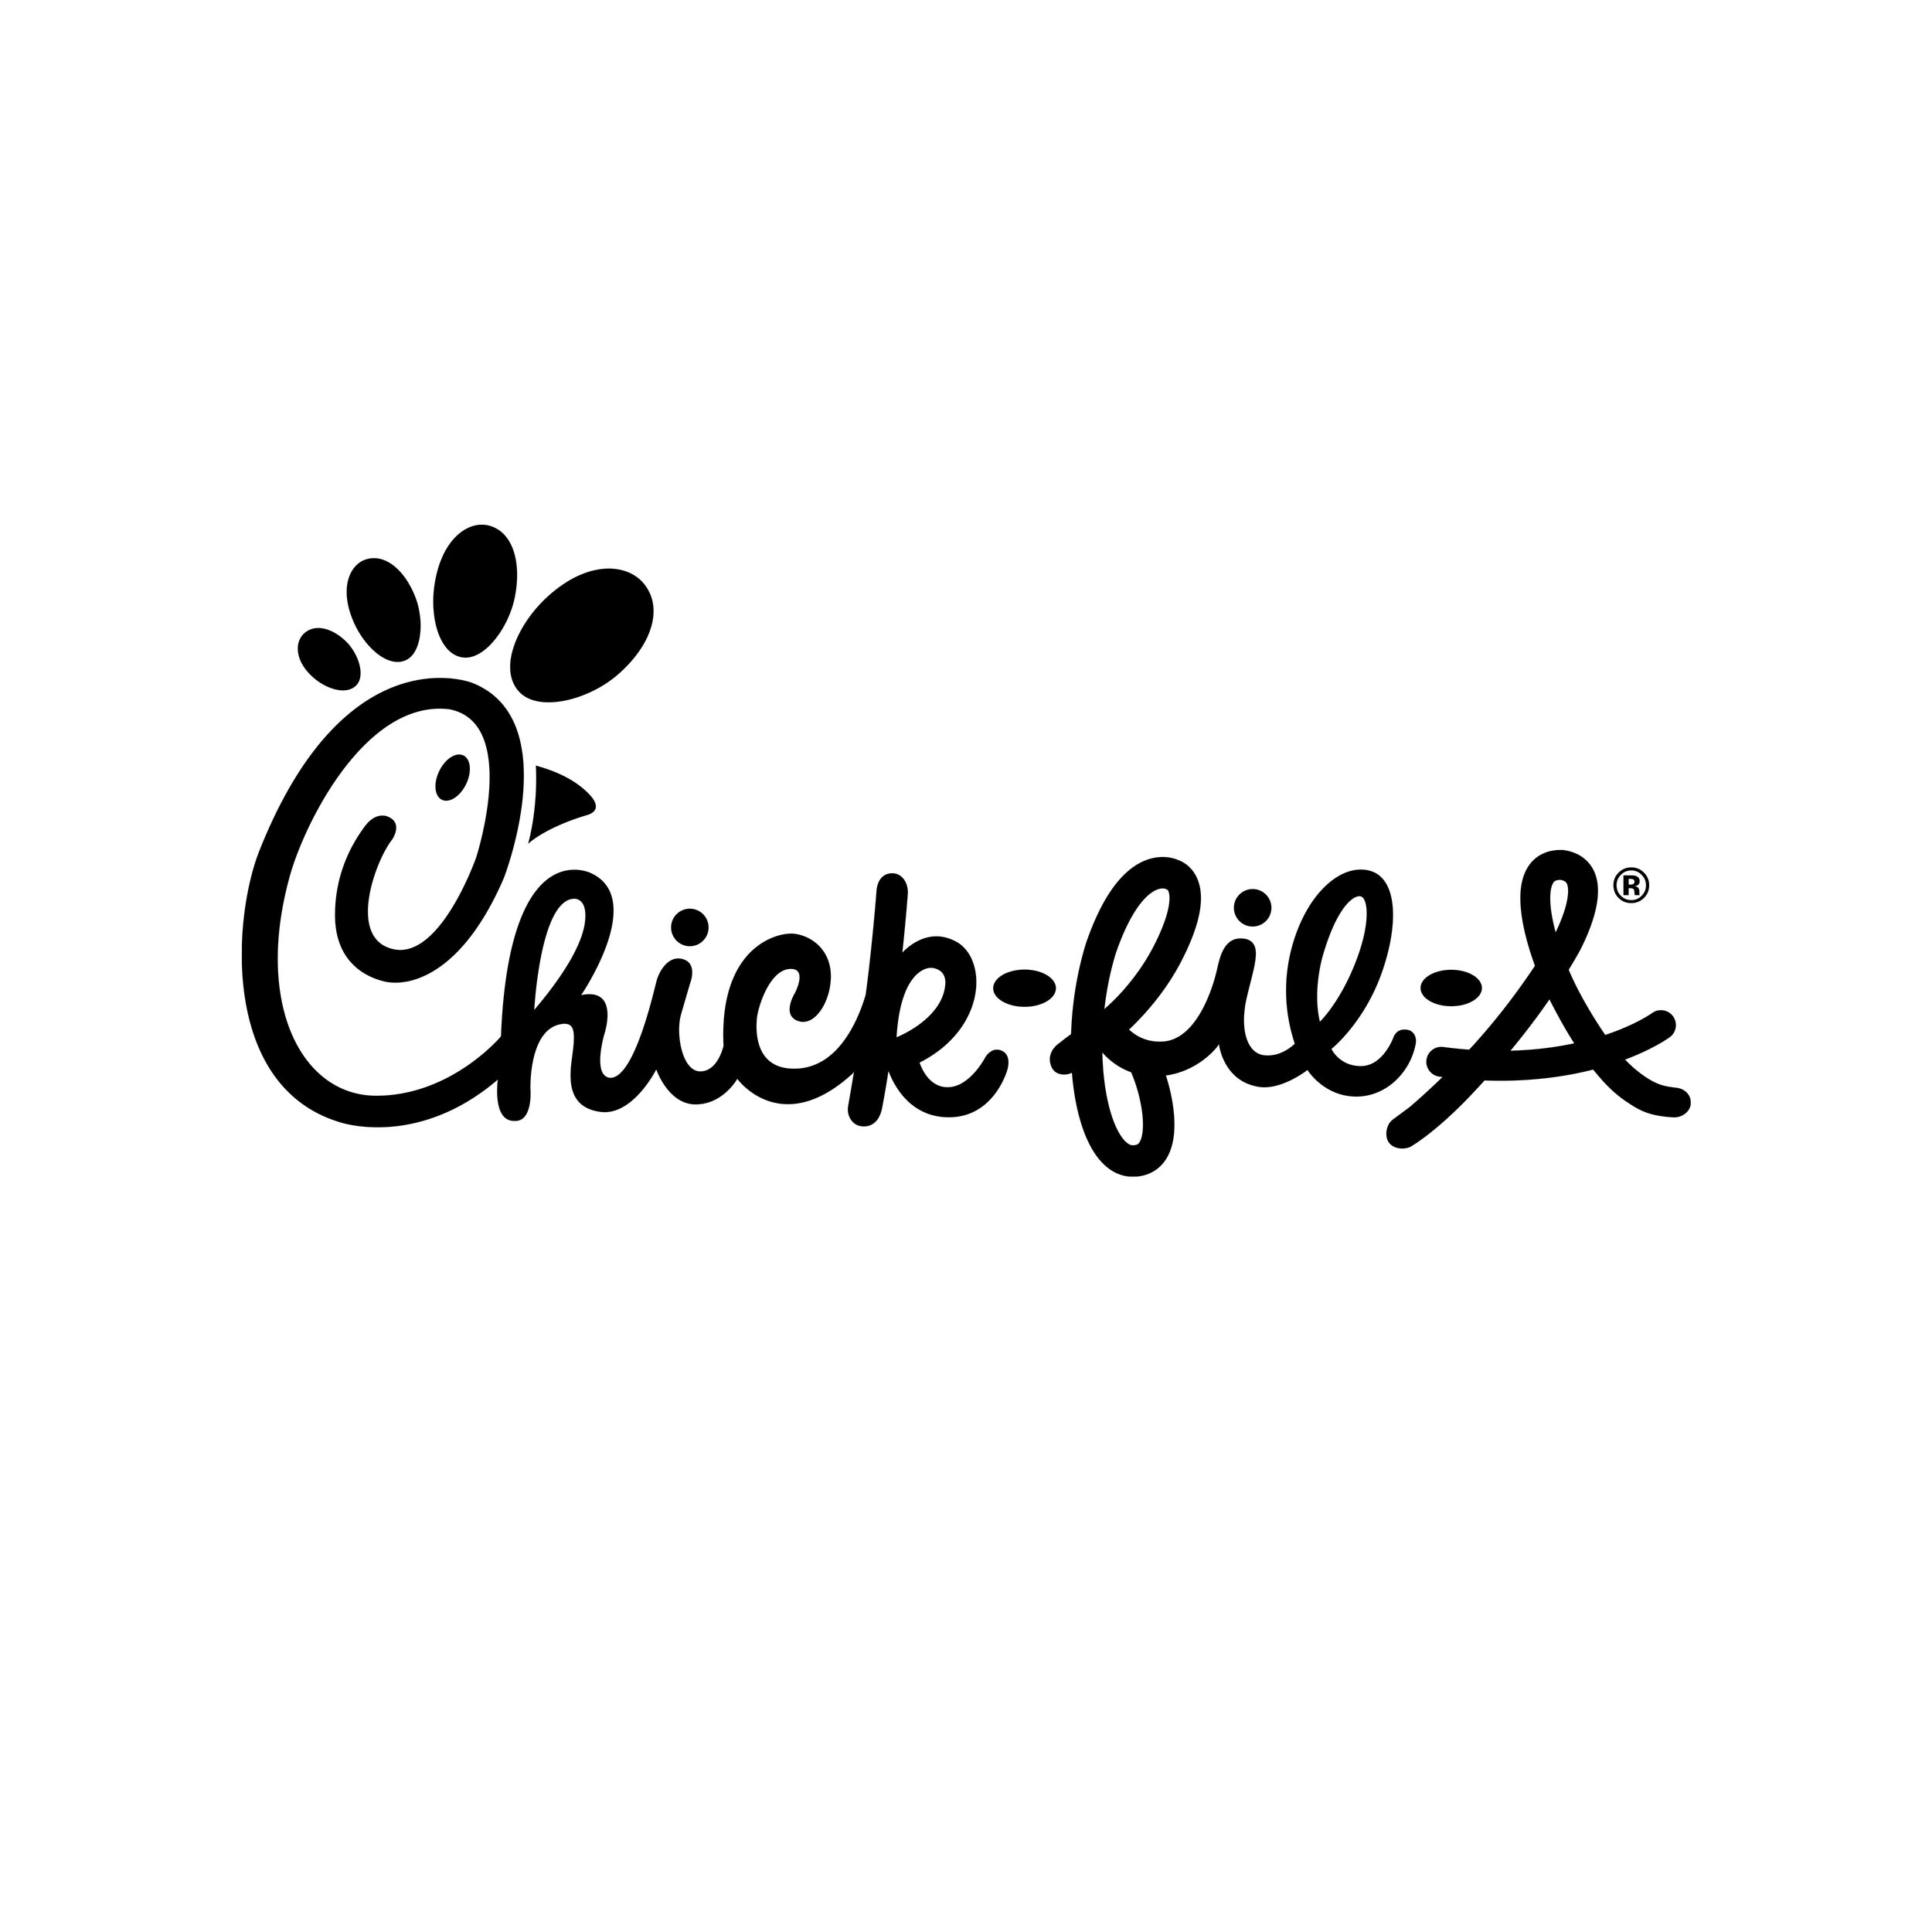 Chick-Fil-A Logo.jpg